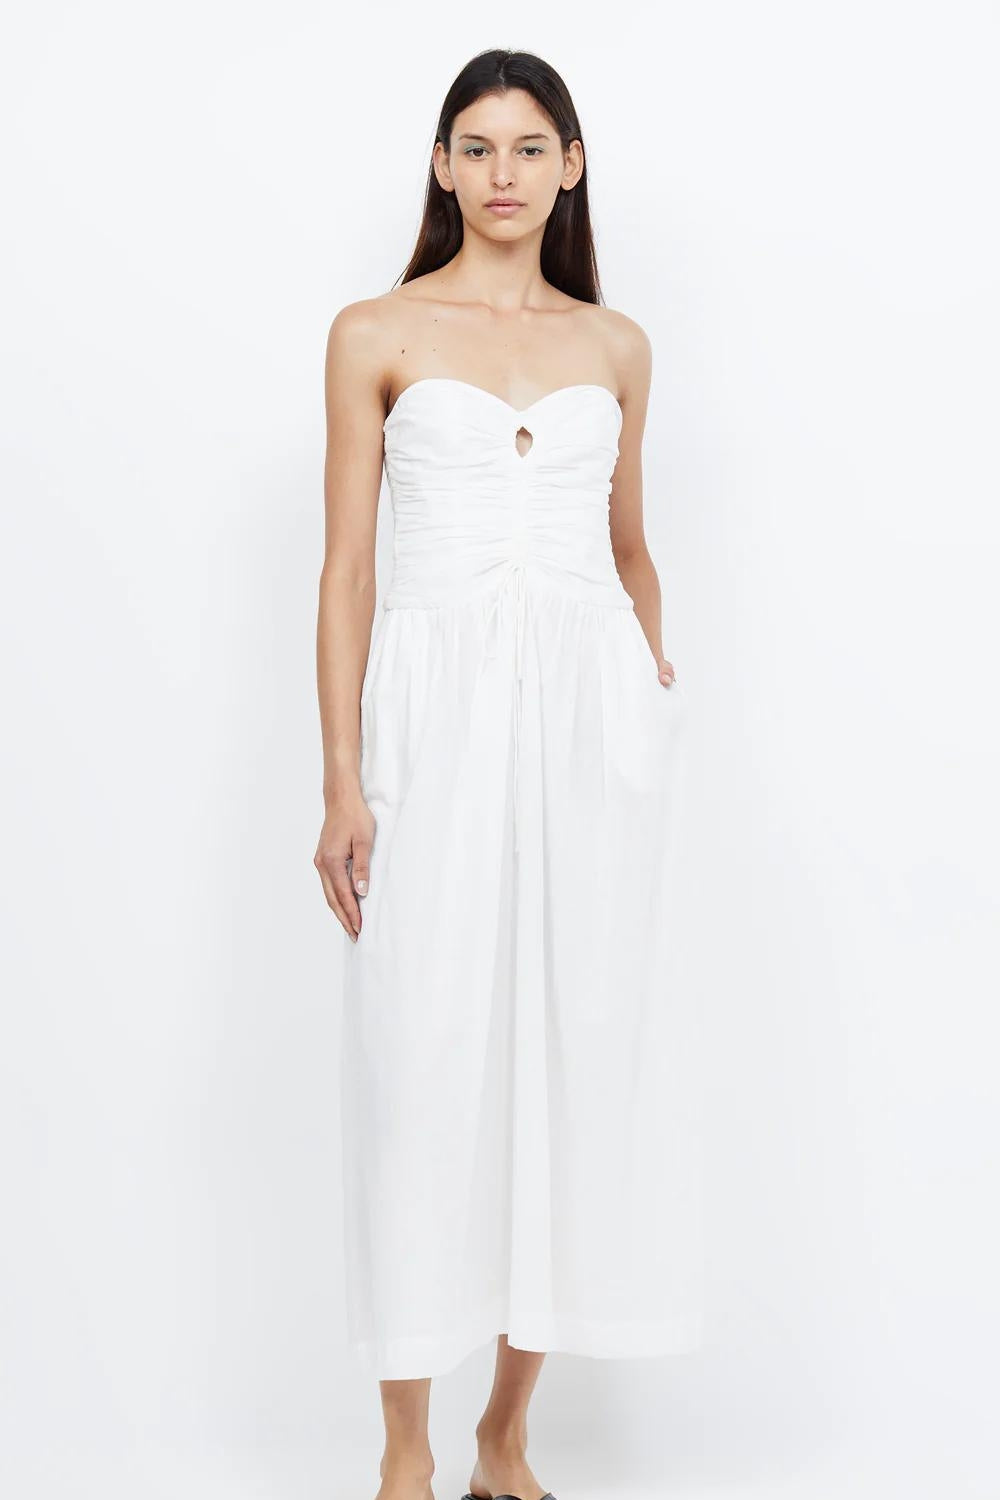 Solstice White Dress